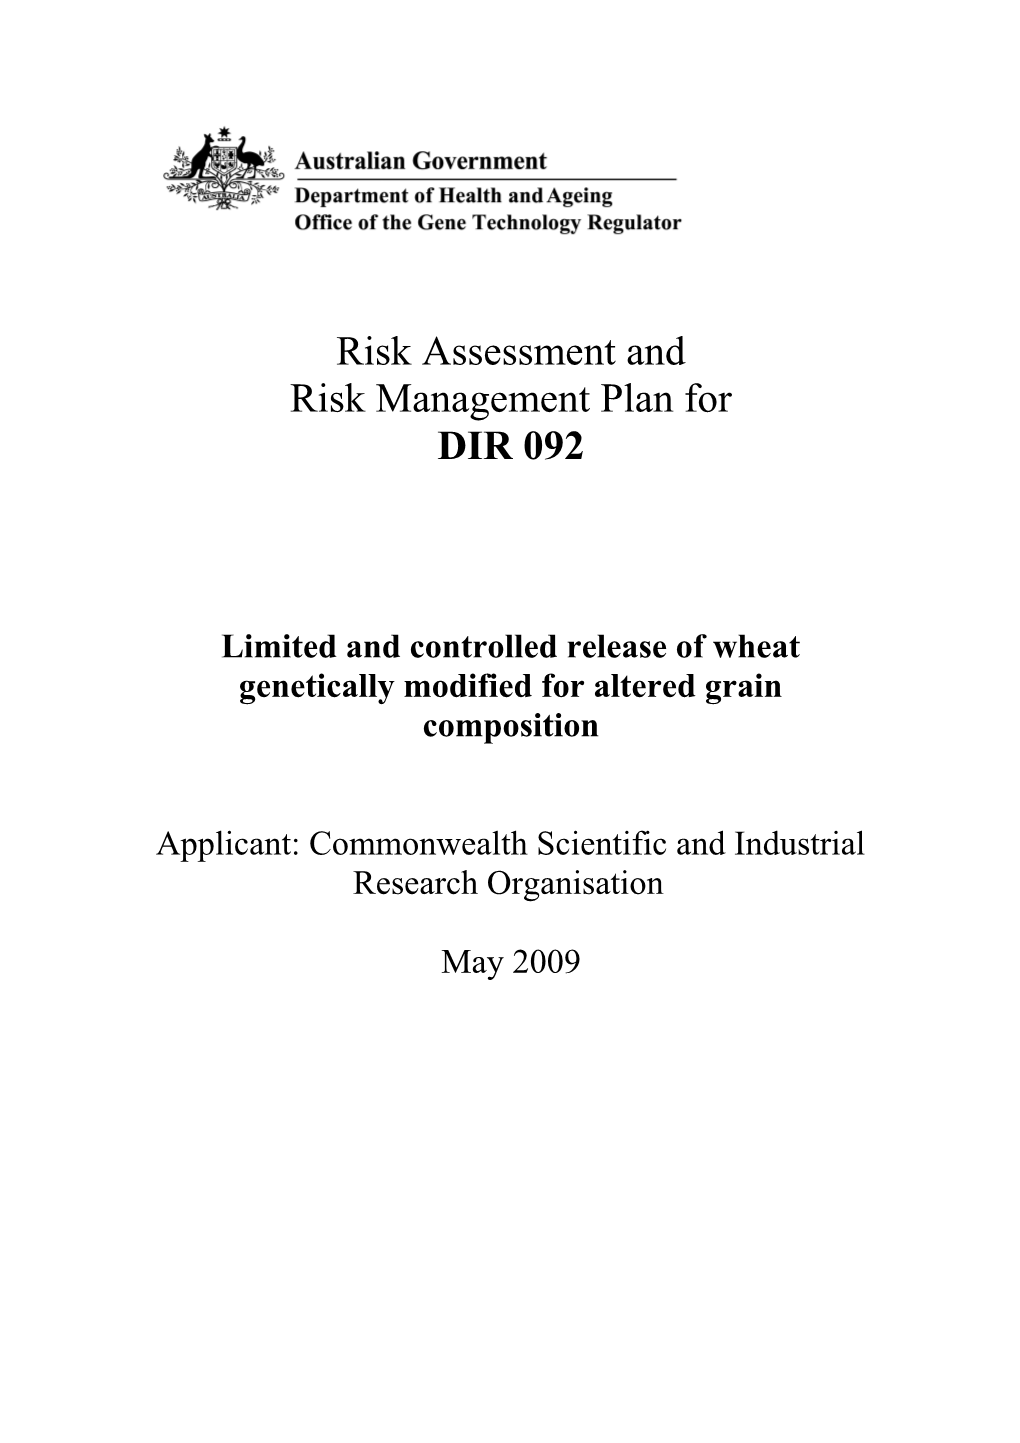 DIR 092 - Risk Assessment and Risk Management Plan